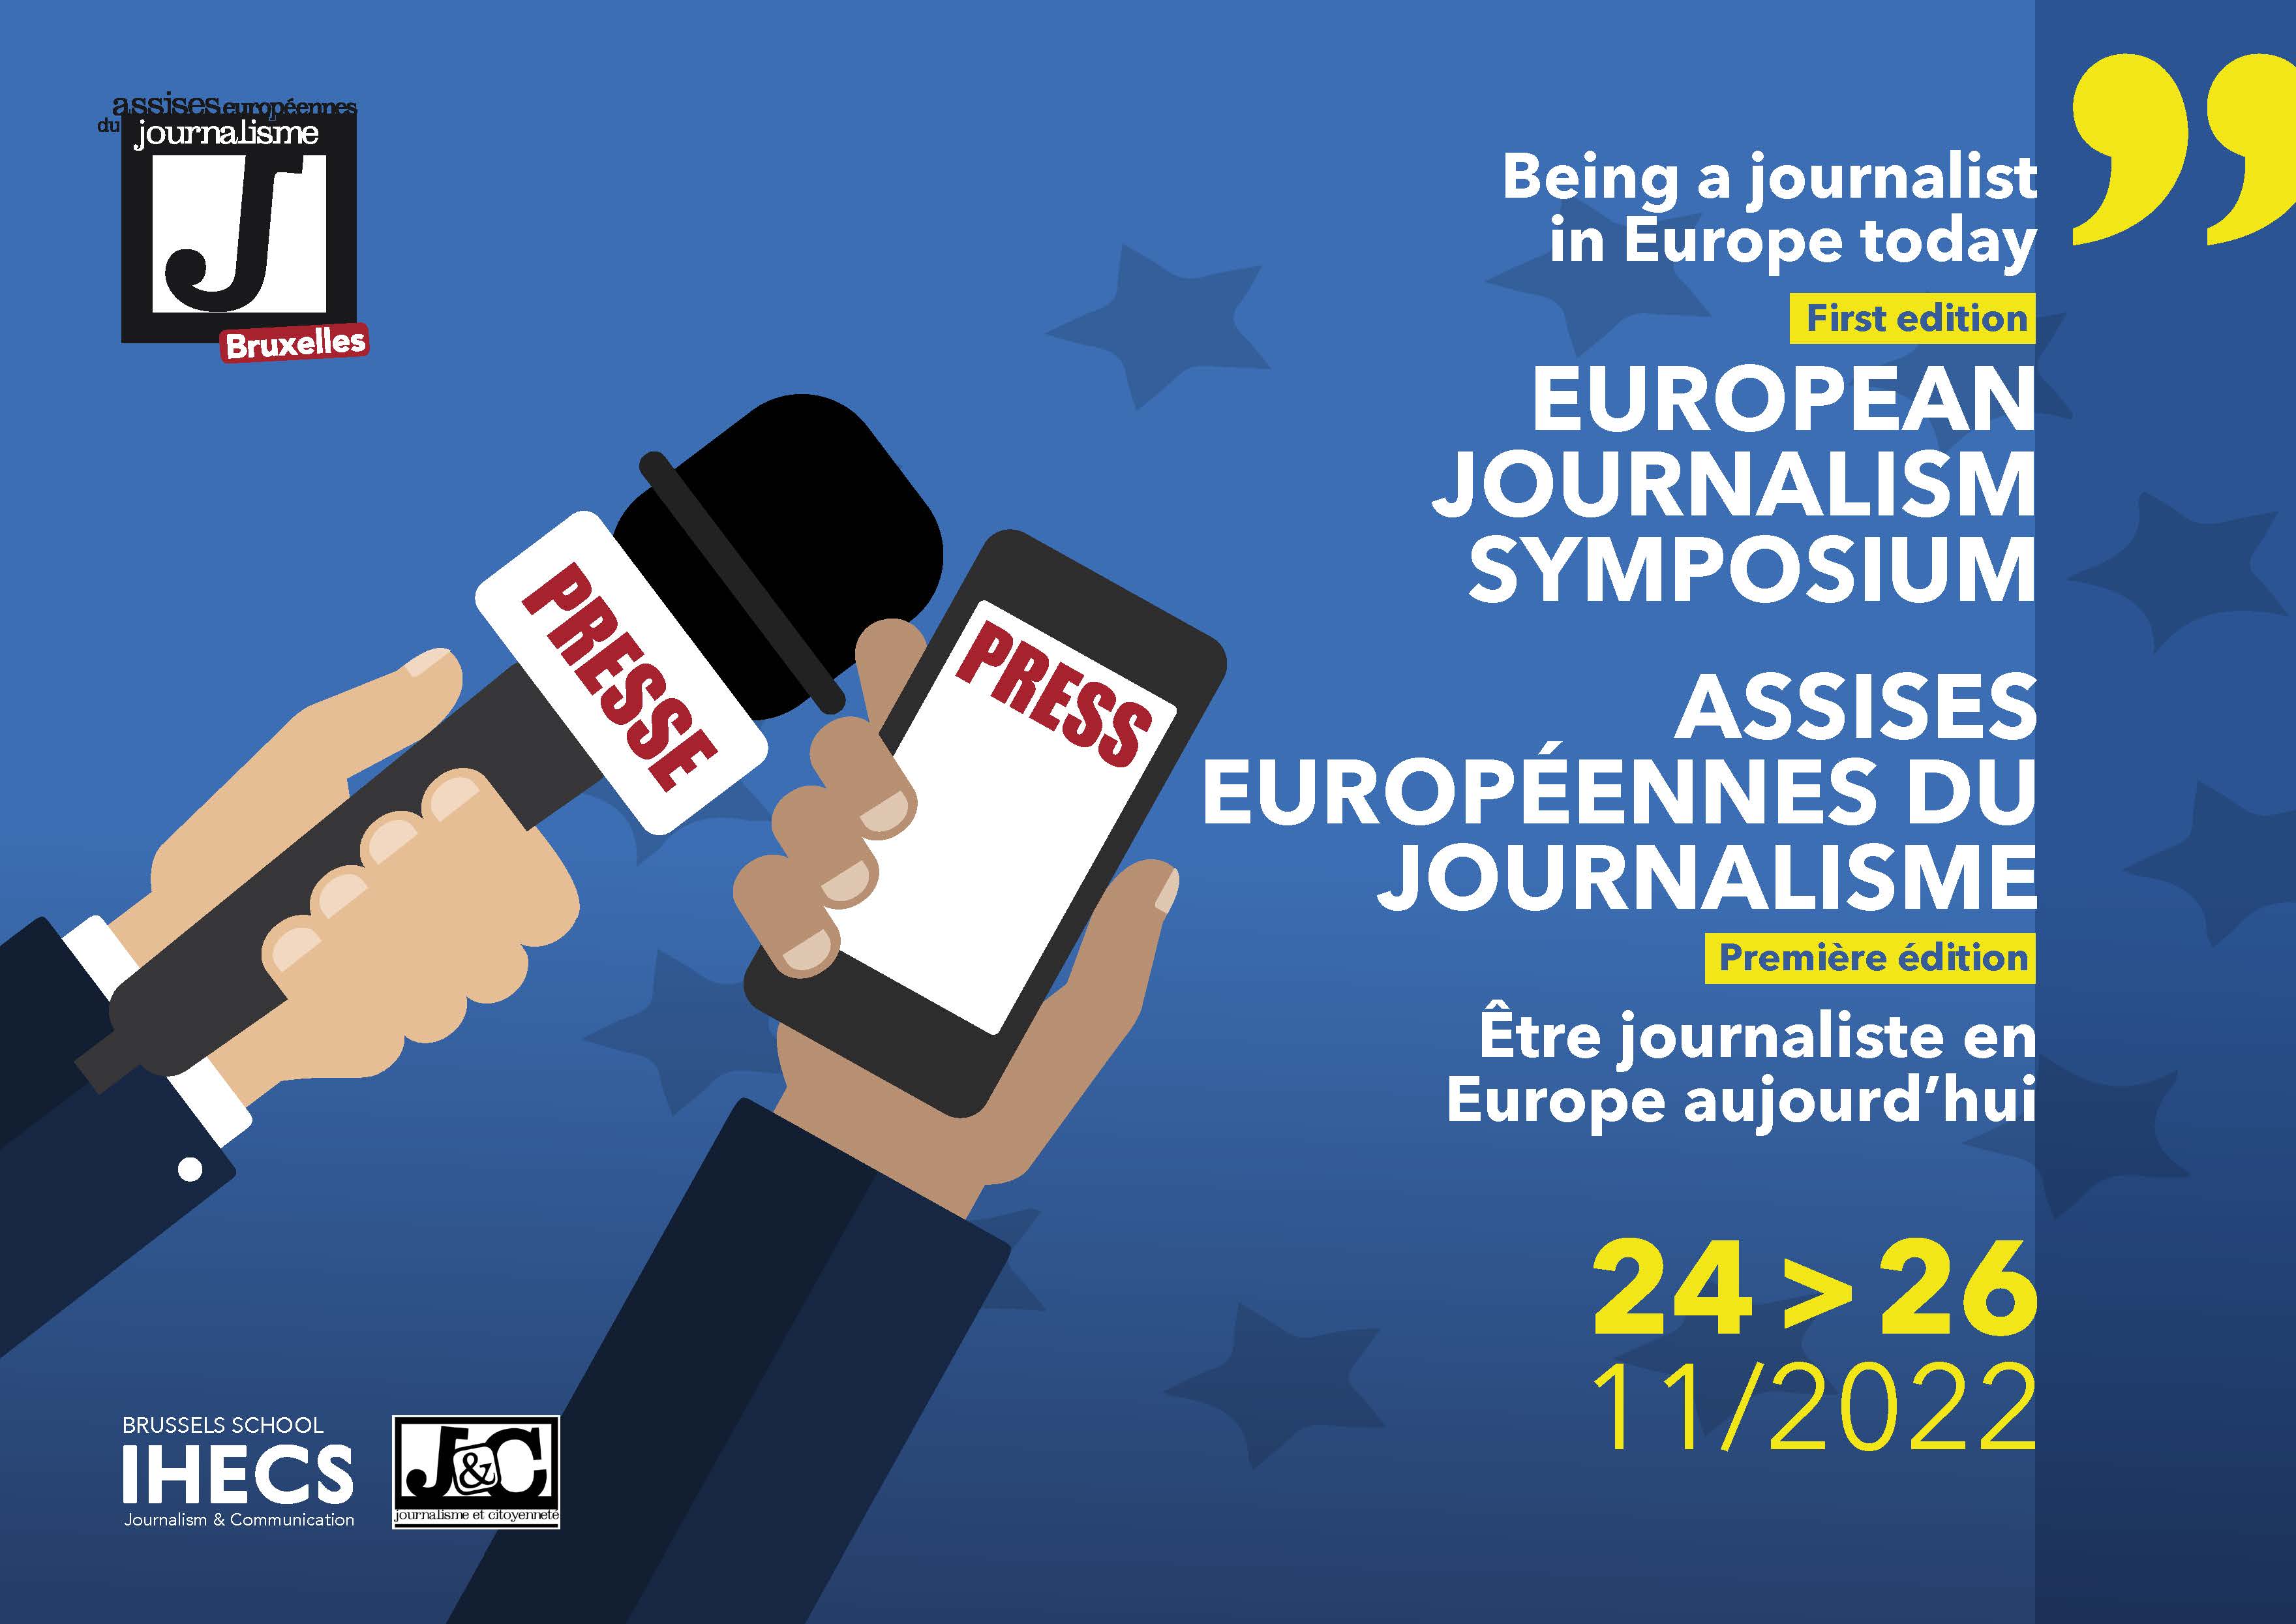 European Journalism Symposium